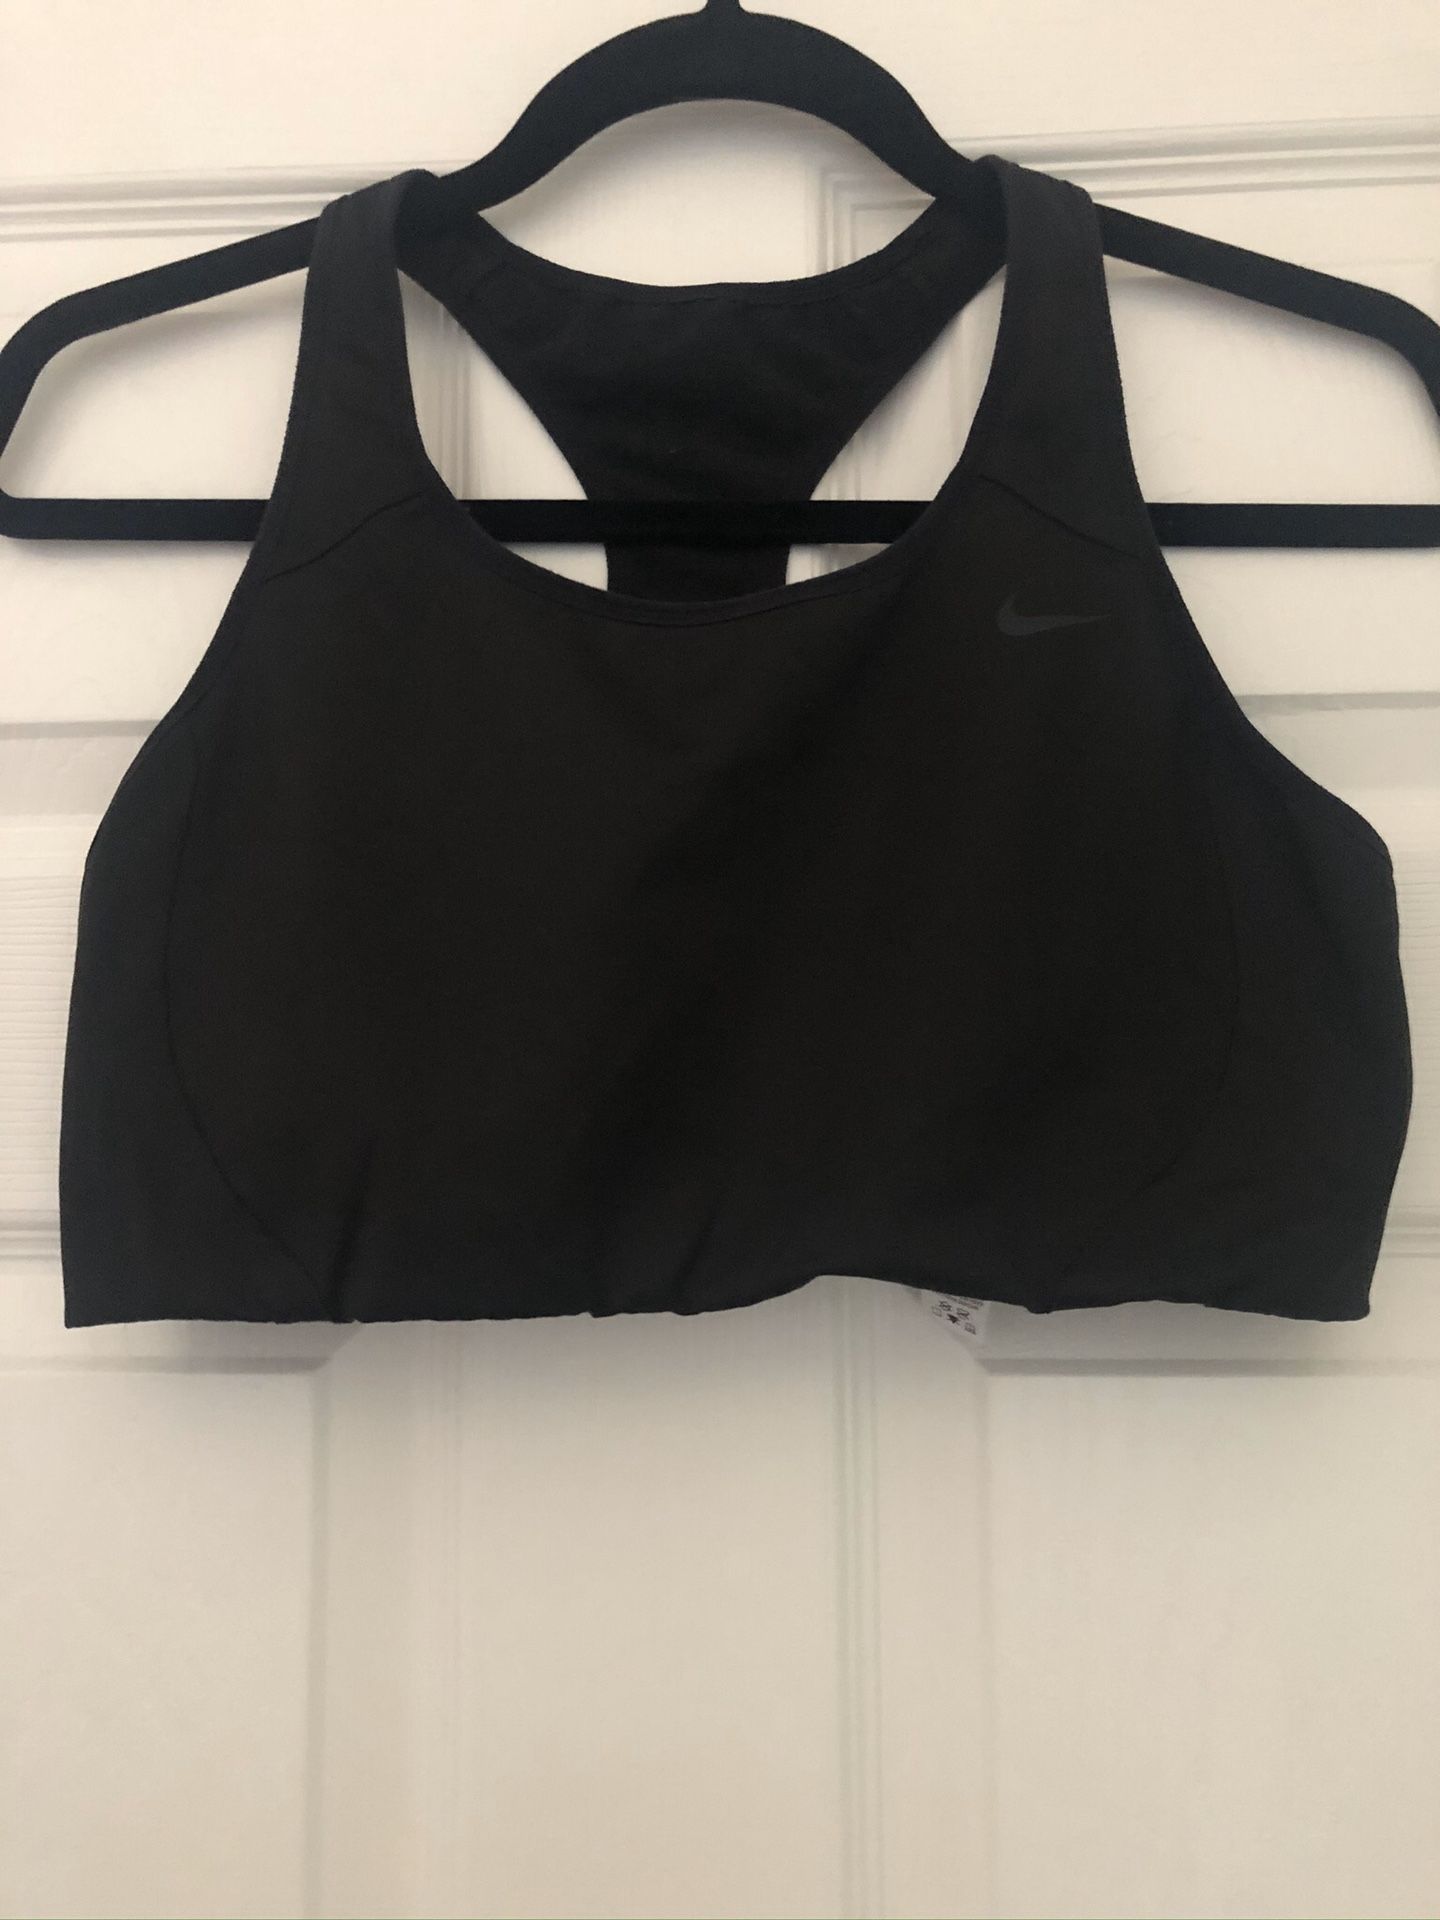 Nike sports bra Women’s Black color size XL -Like New